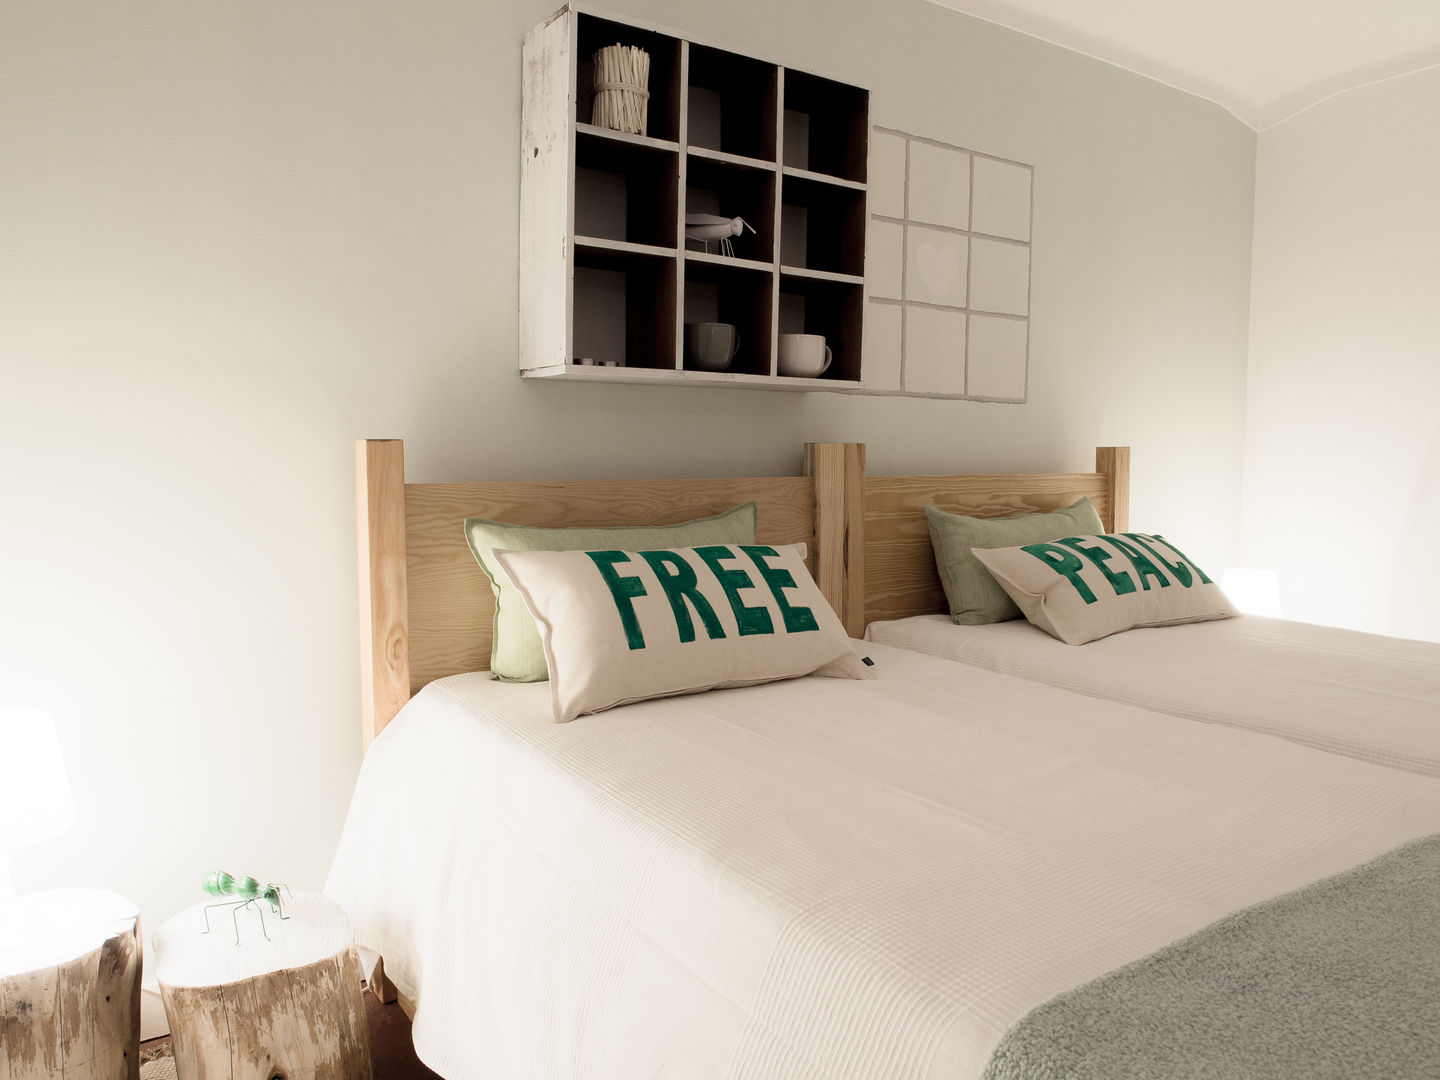 NiceWay Cascais Hostel - Life Bedroom - Cascais, MUDA Home Design MUDA Home Design Комерційні приміщення Готелі